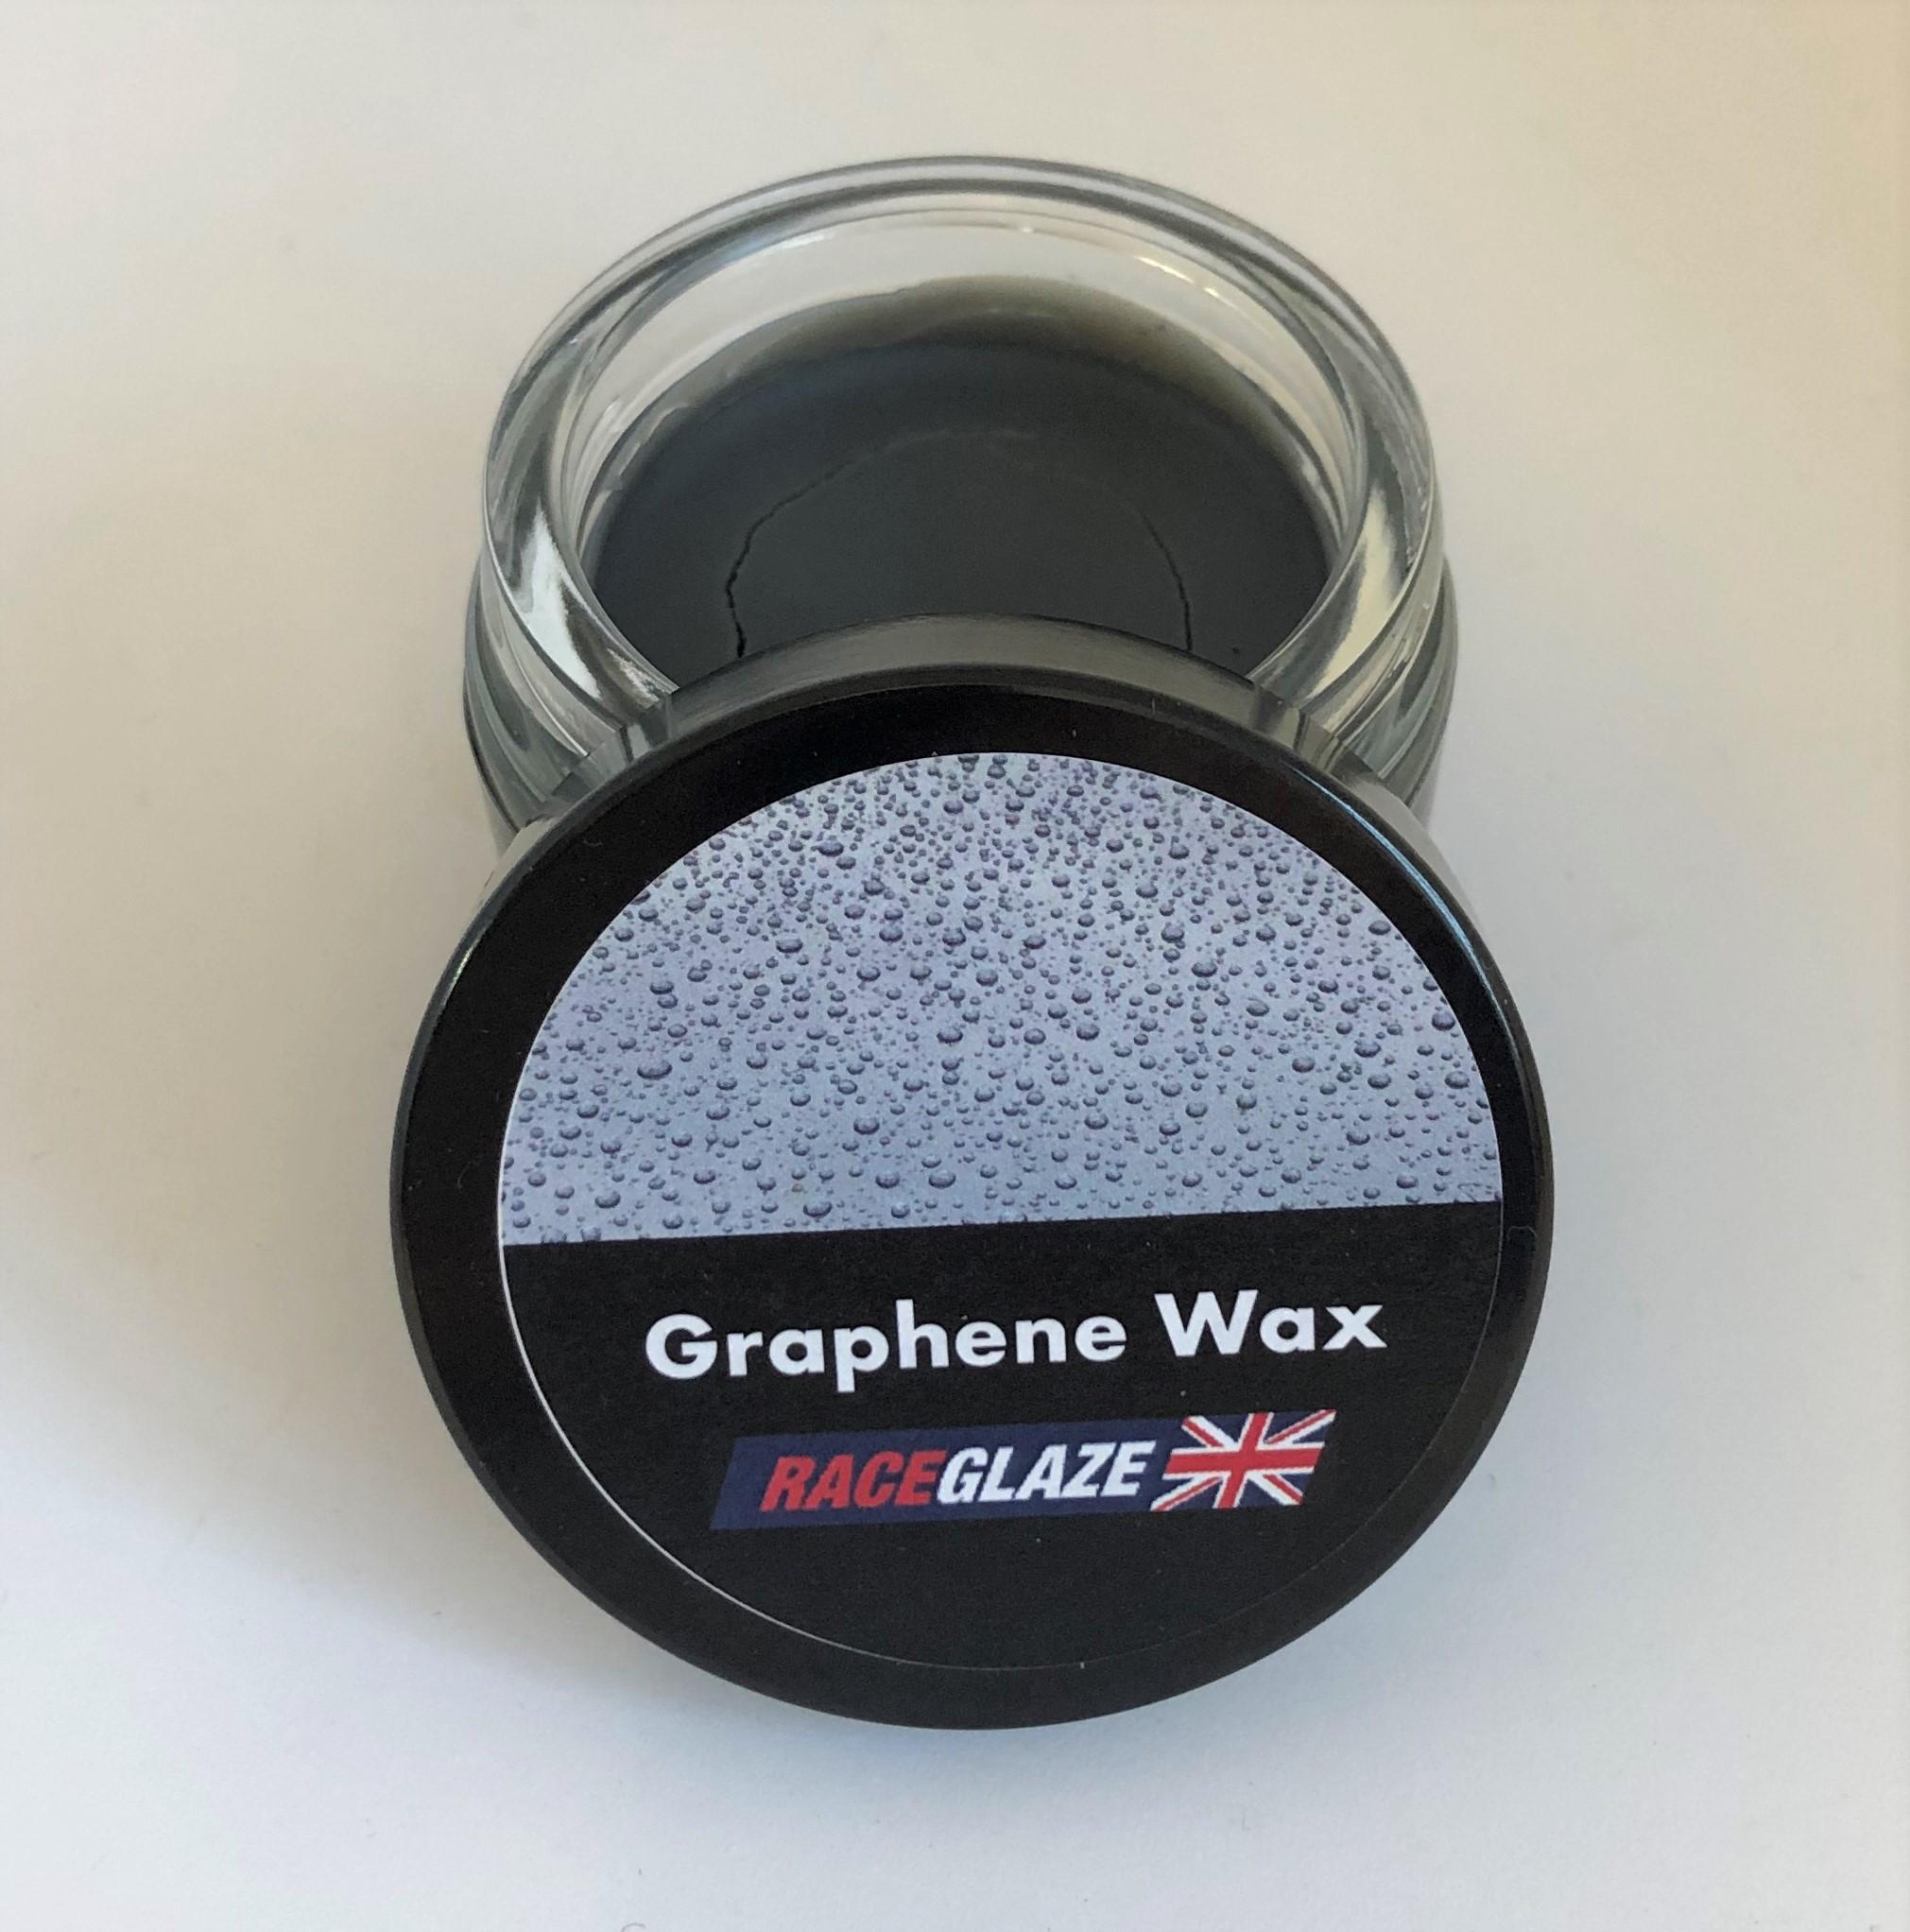 Race Glaze open tine of Graphene Wax